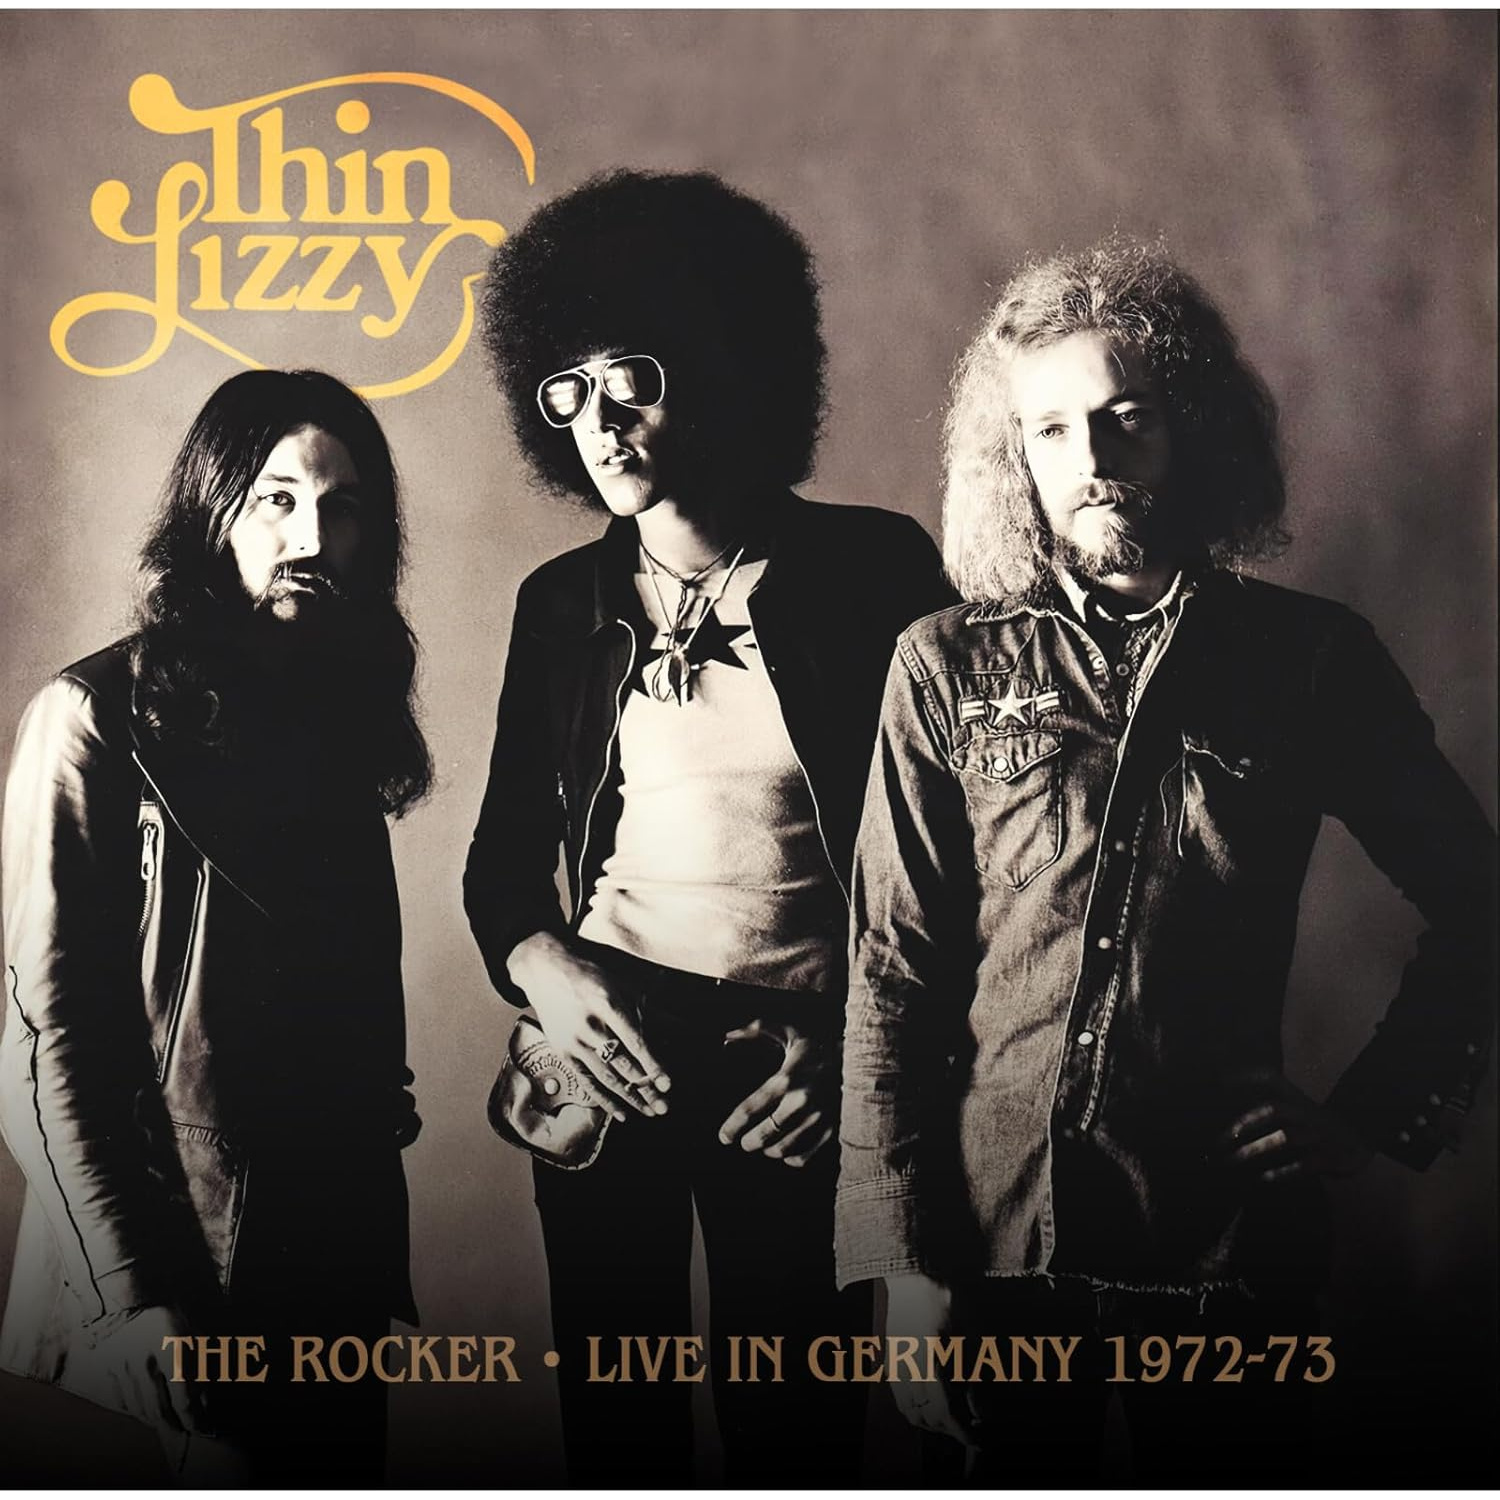 THE ROCKER - LIVE IN GERMANY 1972-73